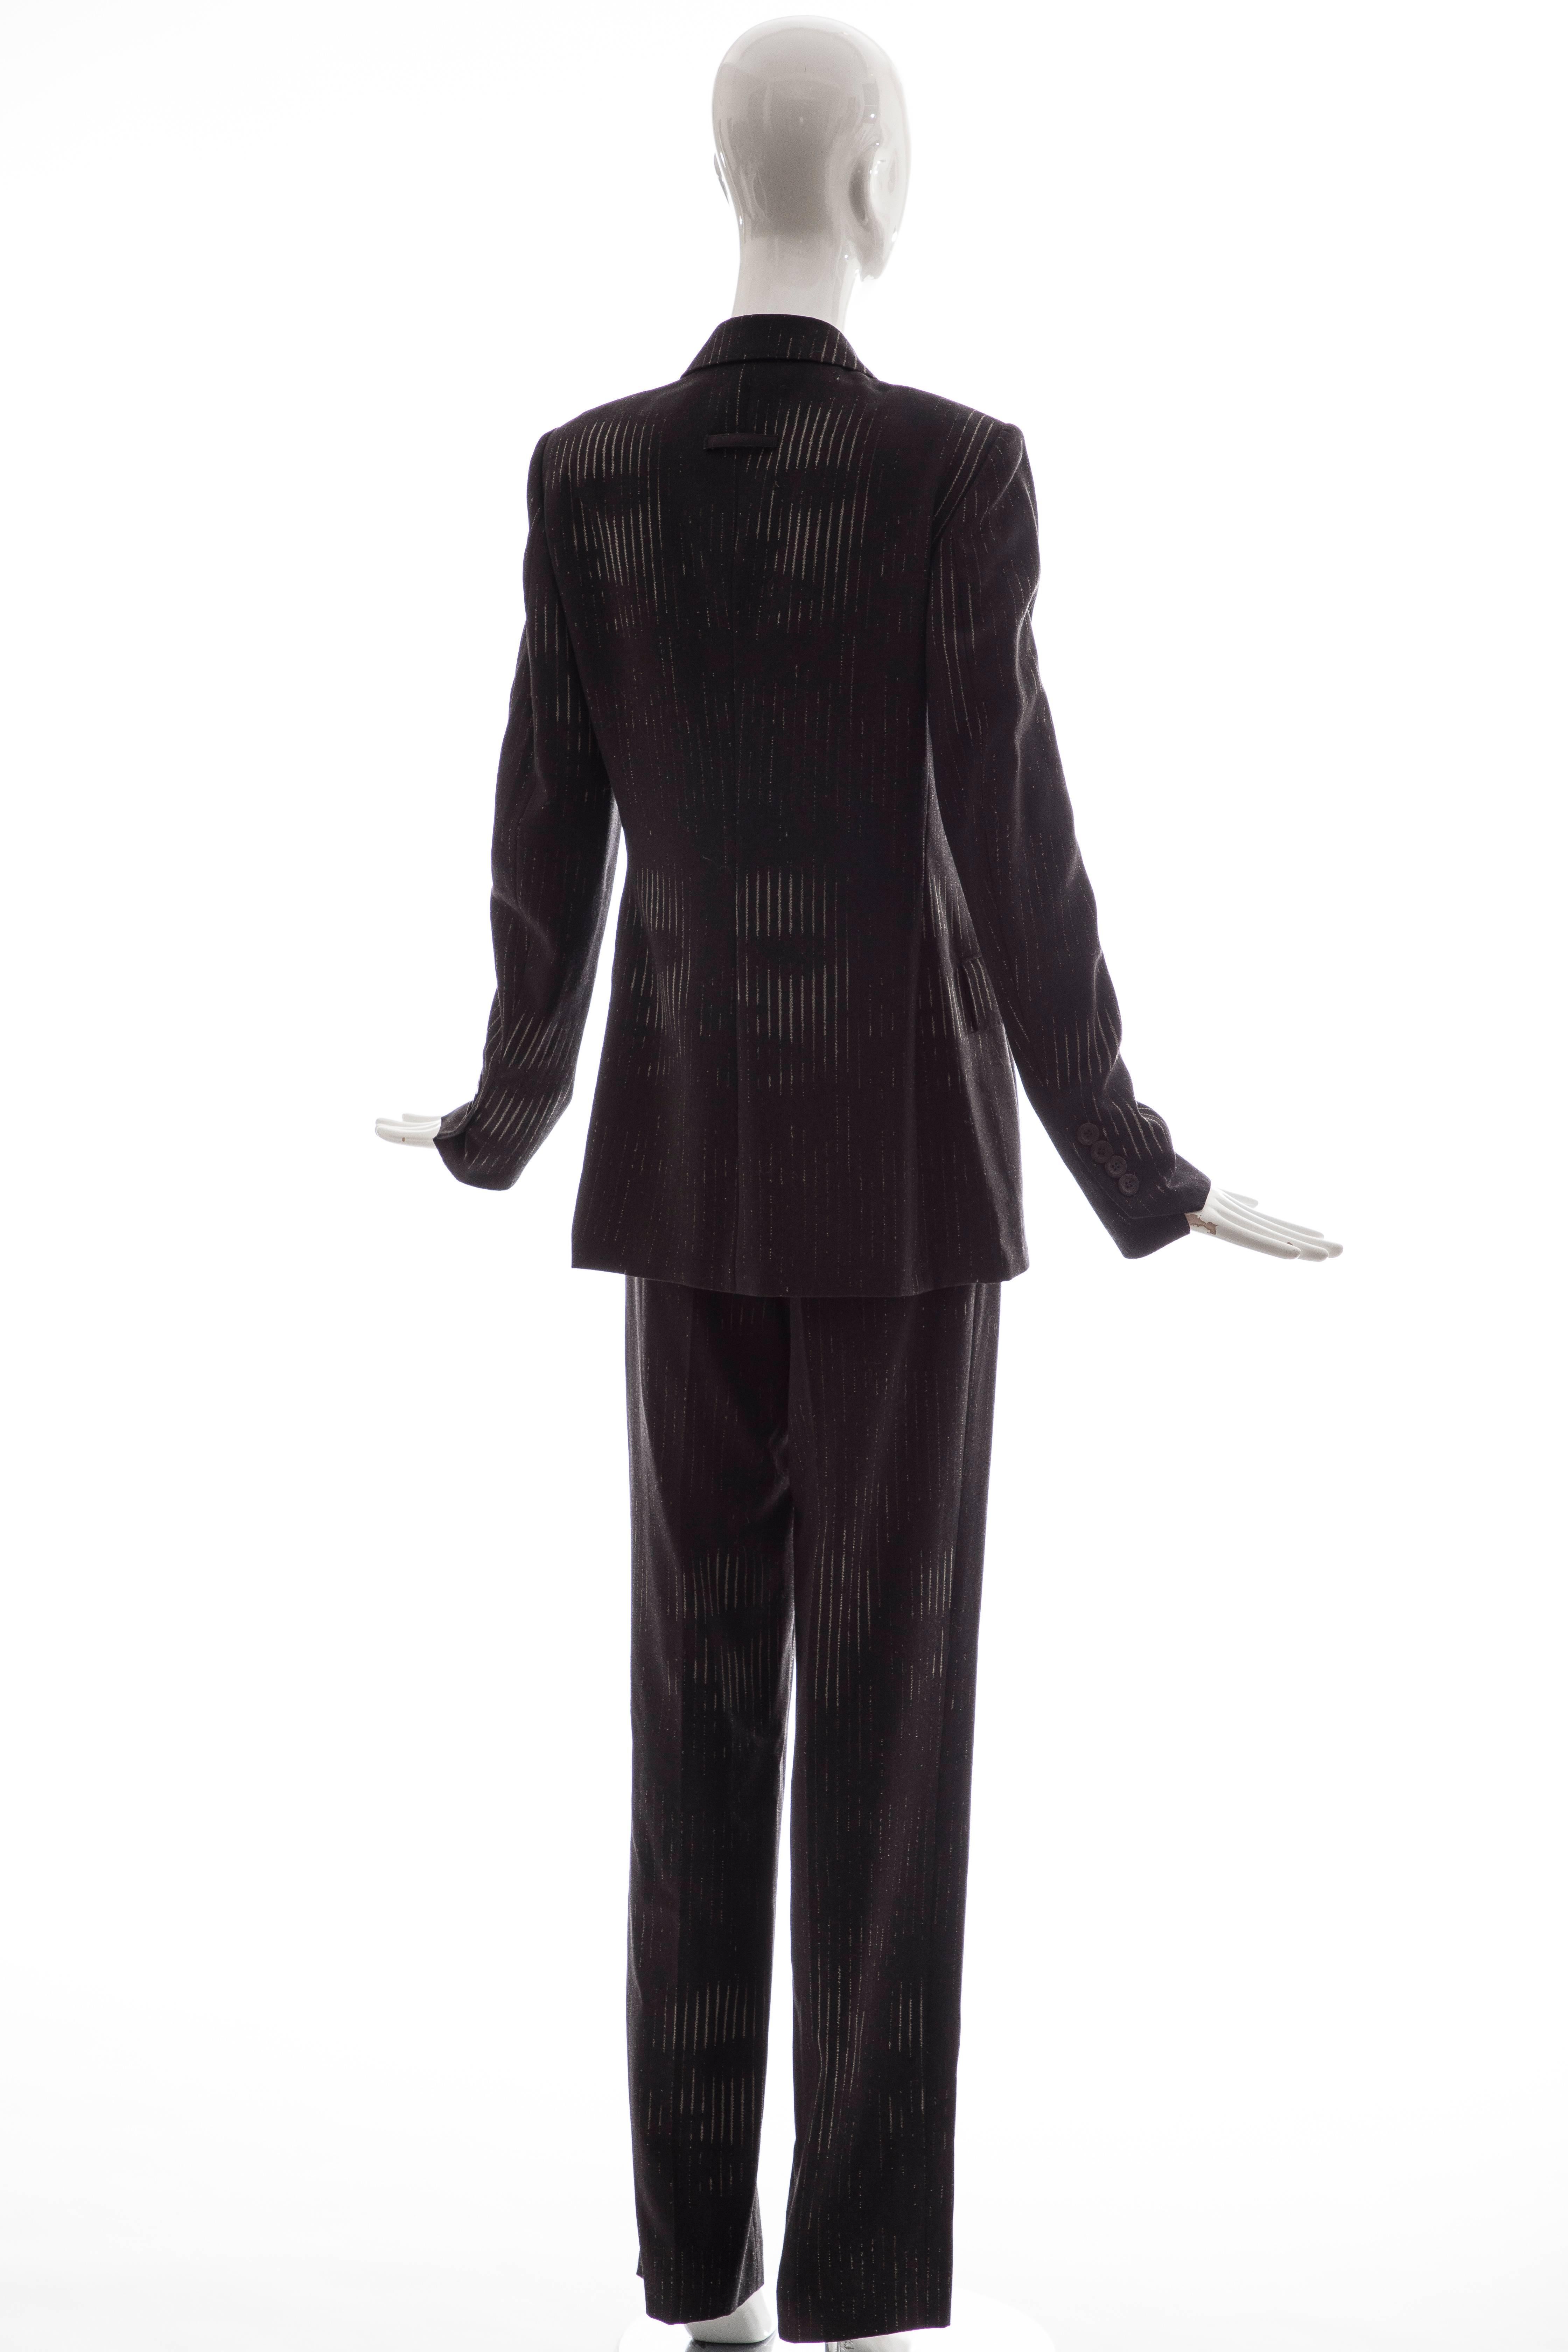 Jean Paul Gaultier 3D Printed Faces Wool Grey Pinstripe Pantsuit, Circa 1990's 1